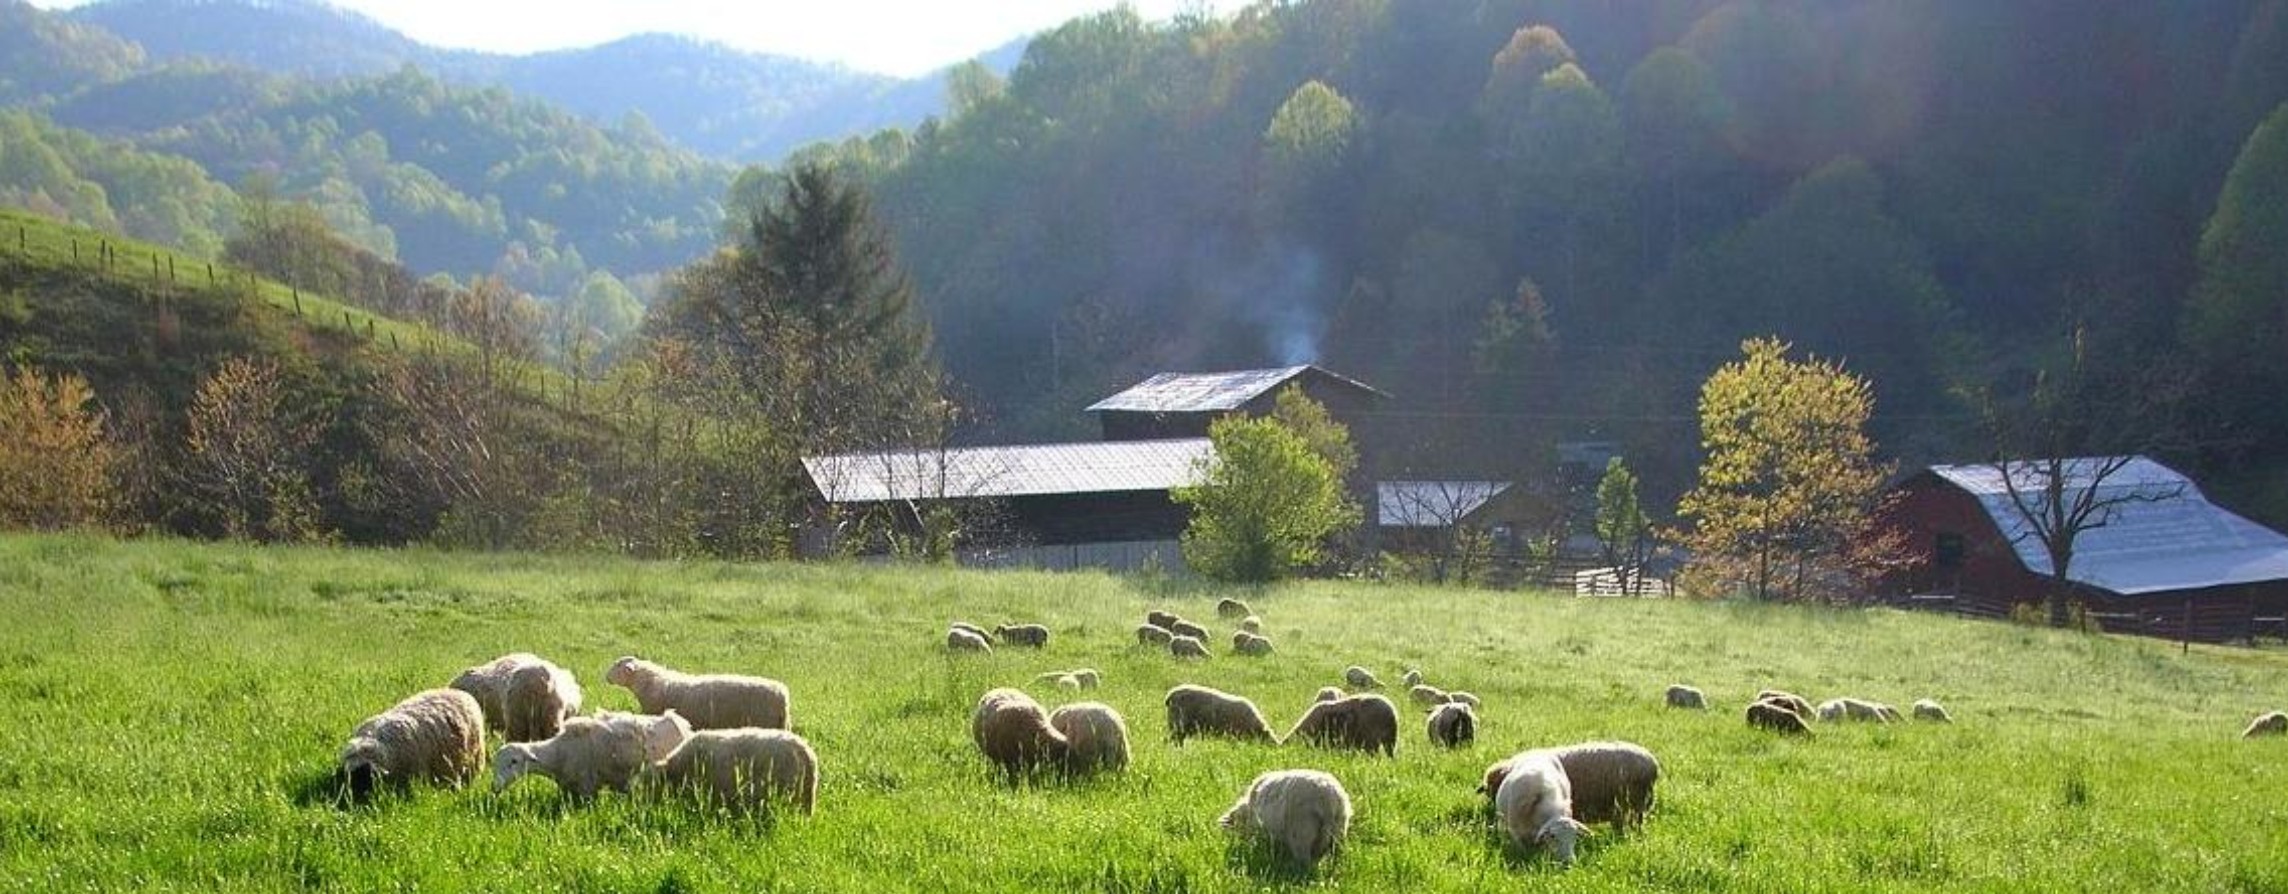 East Fork Farm – Farm * Cottages * Gristmill